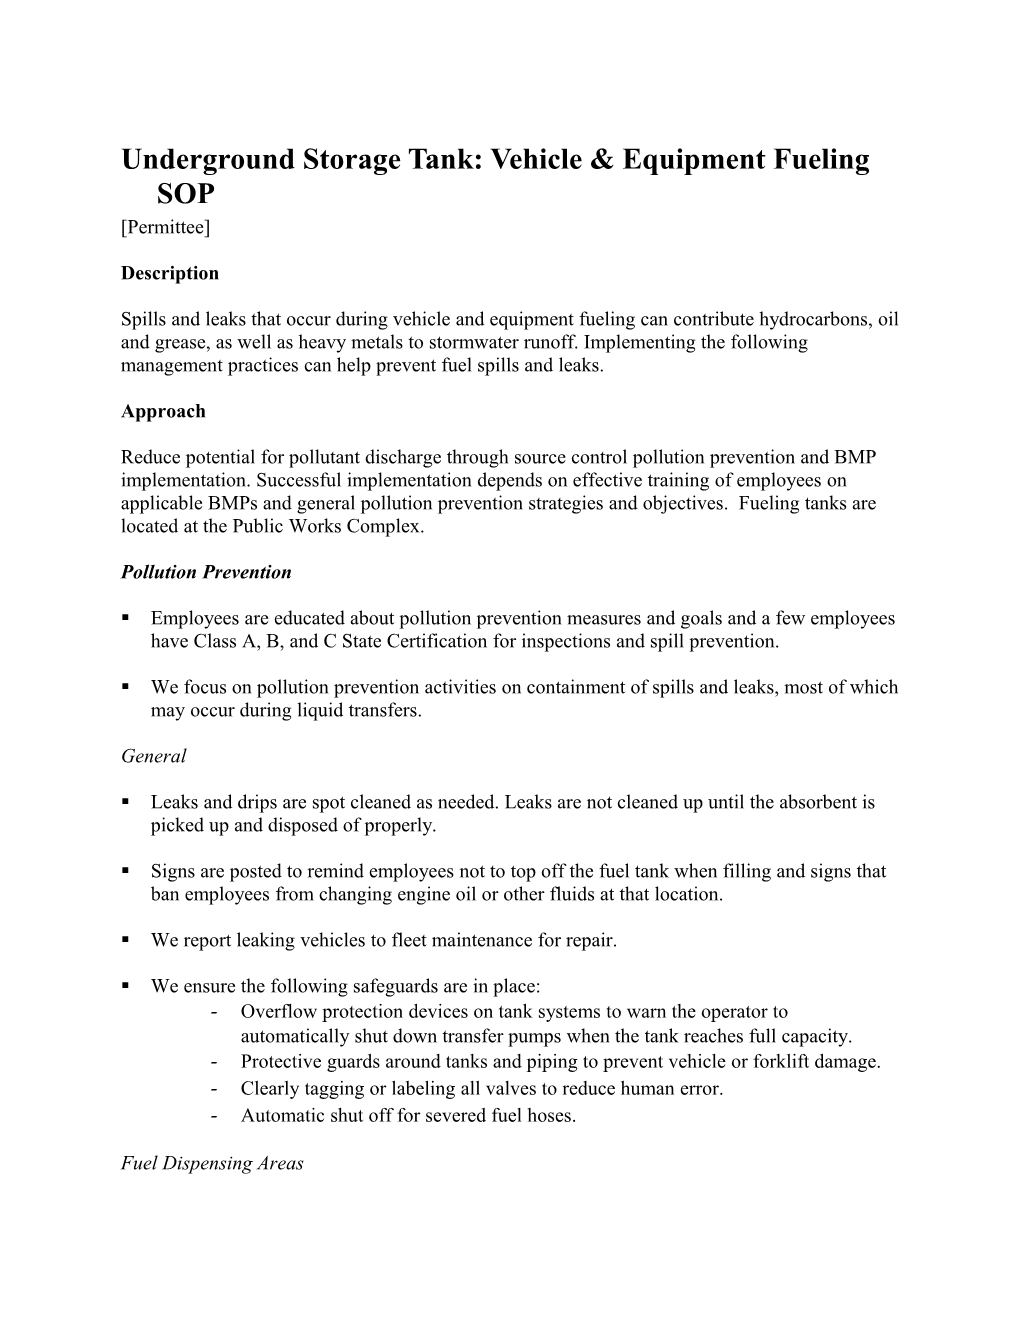 Underground Storage Tank: Vehicle & Equipment Fueling SOP